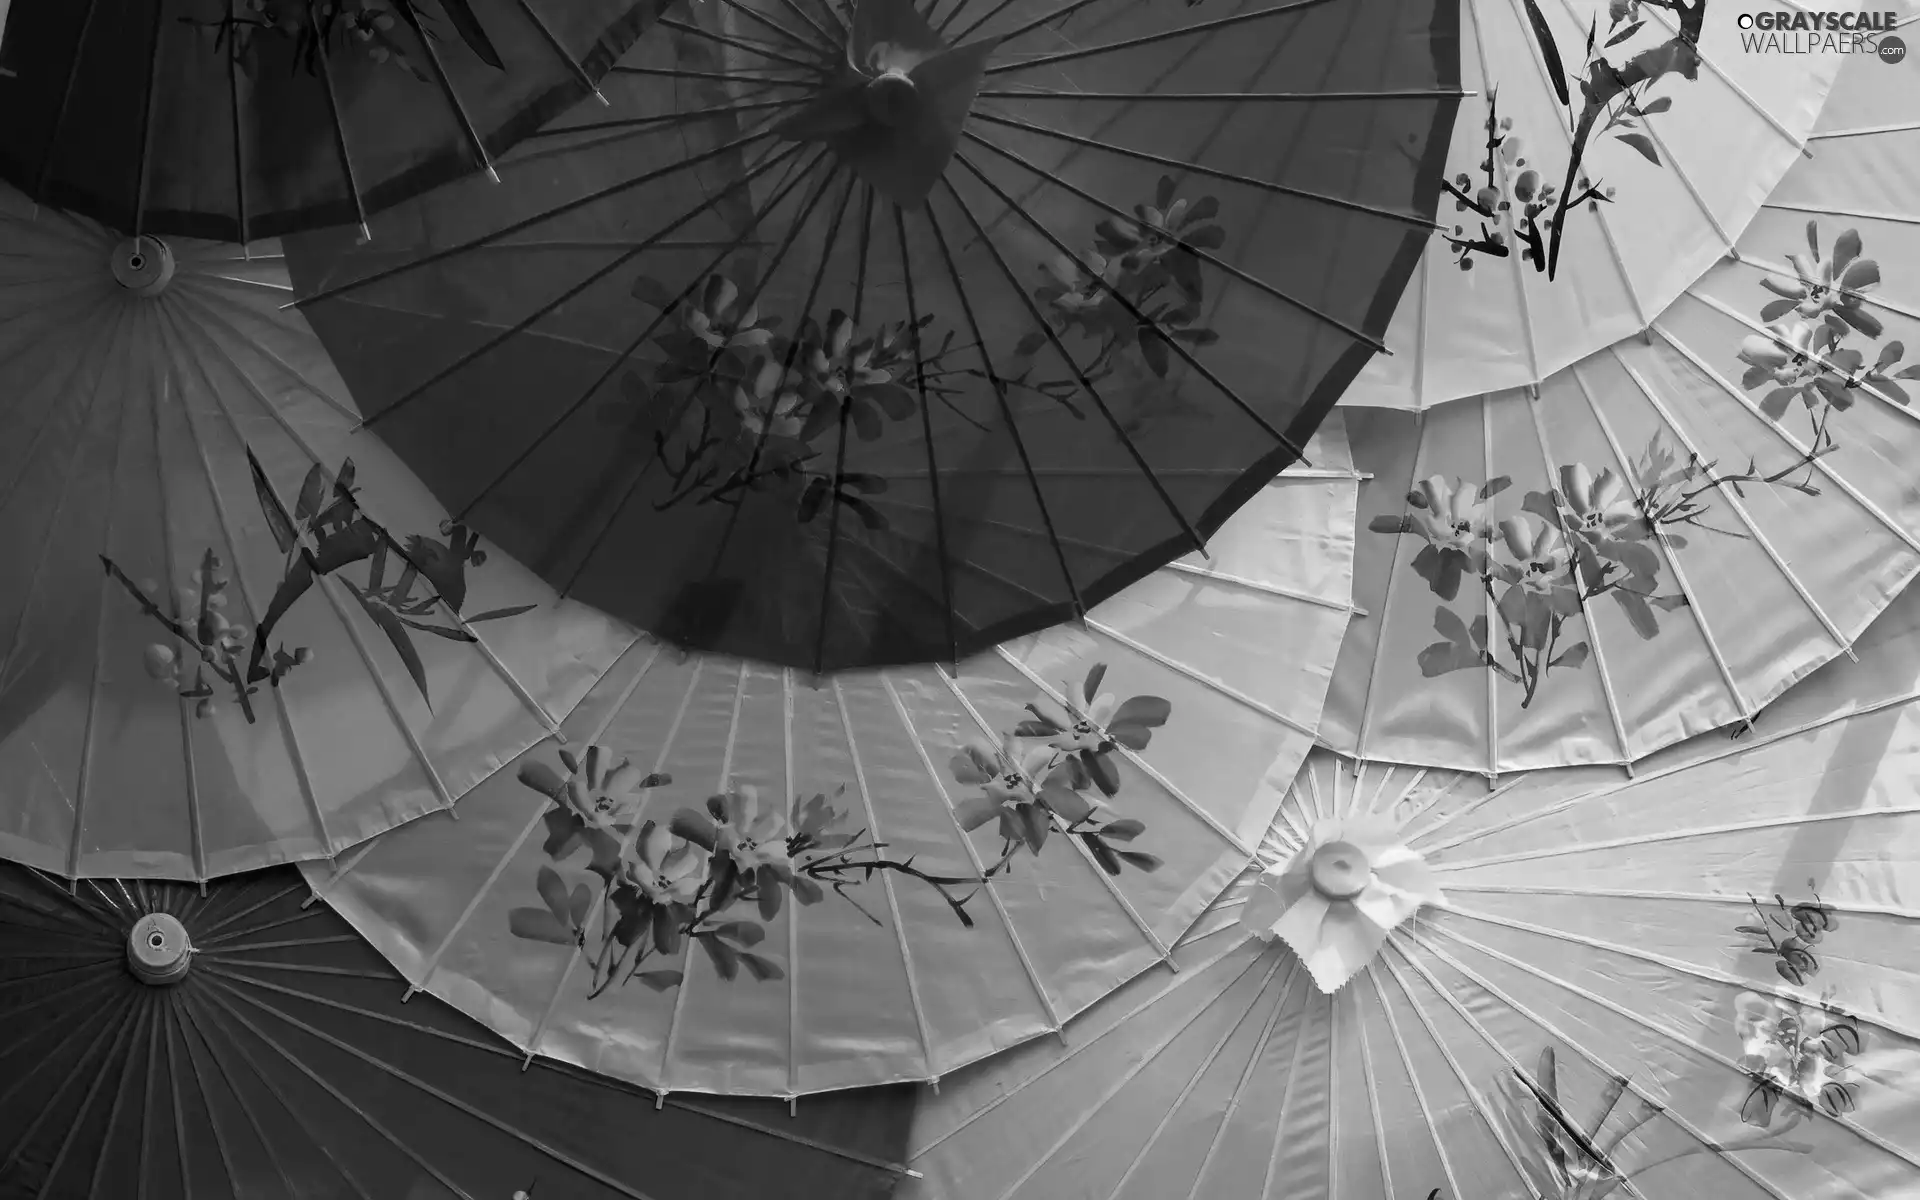 Japanese, color, flowers, umbrellas